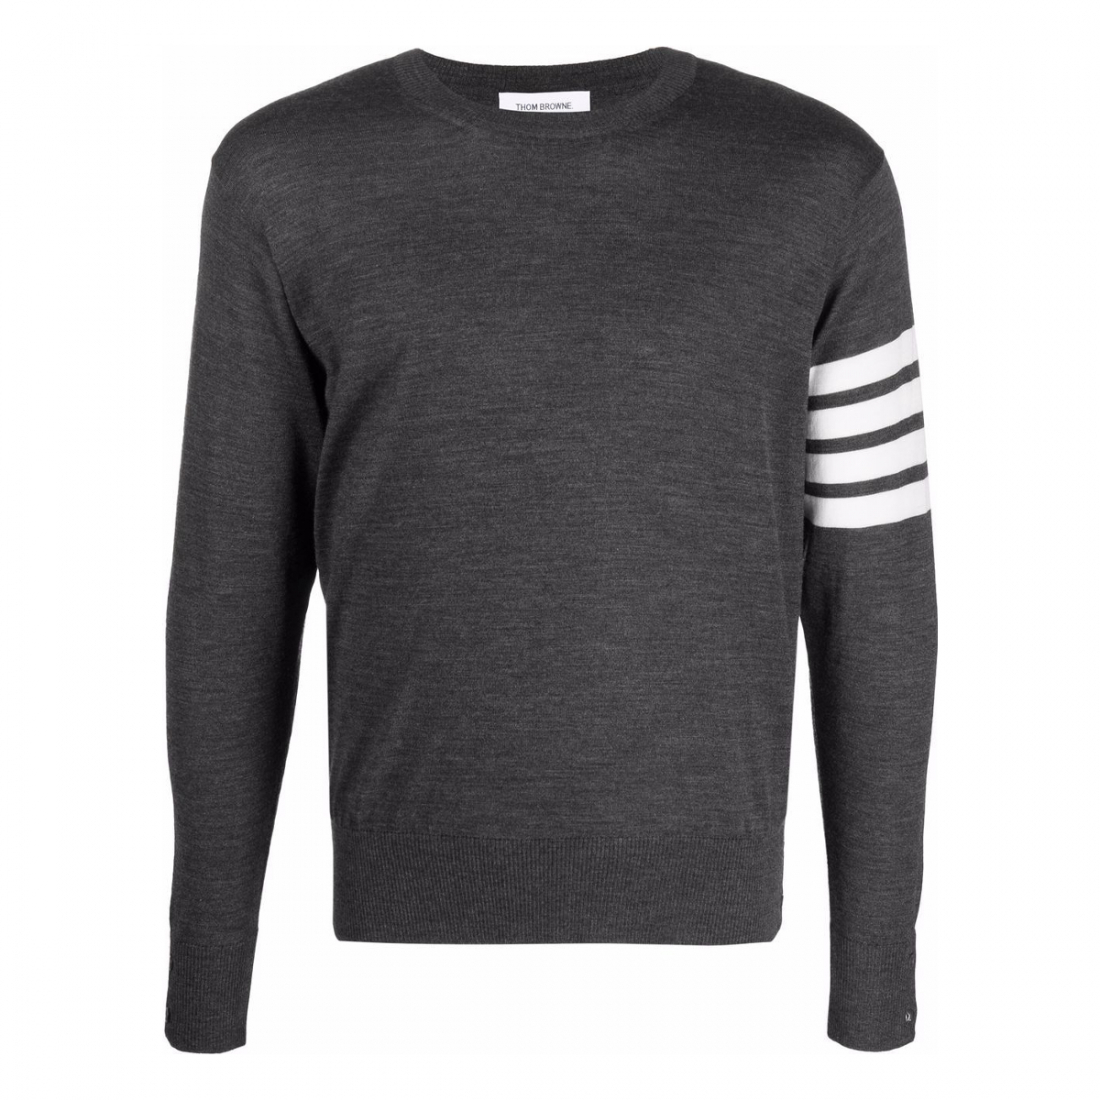 Men's '4 Bar' Sweater